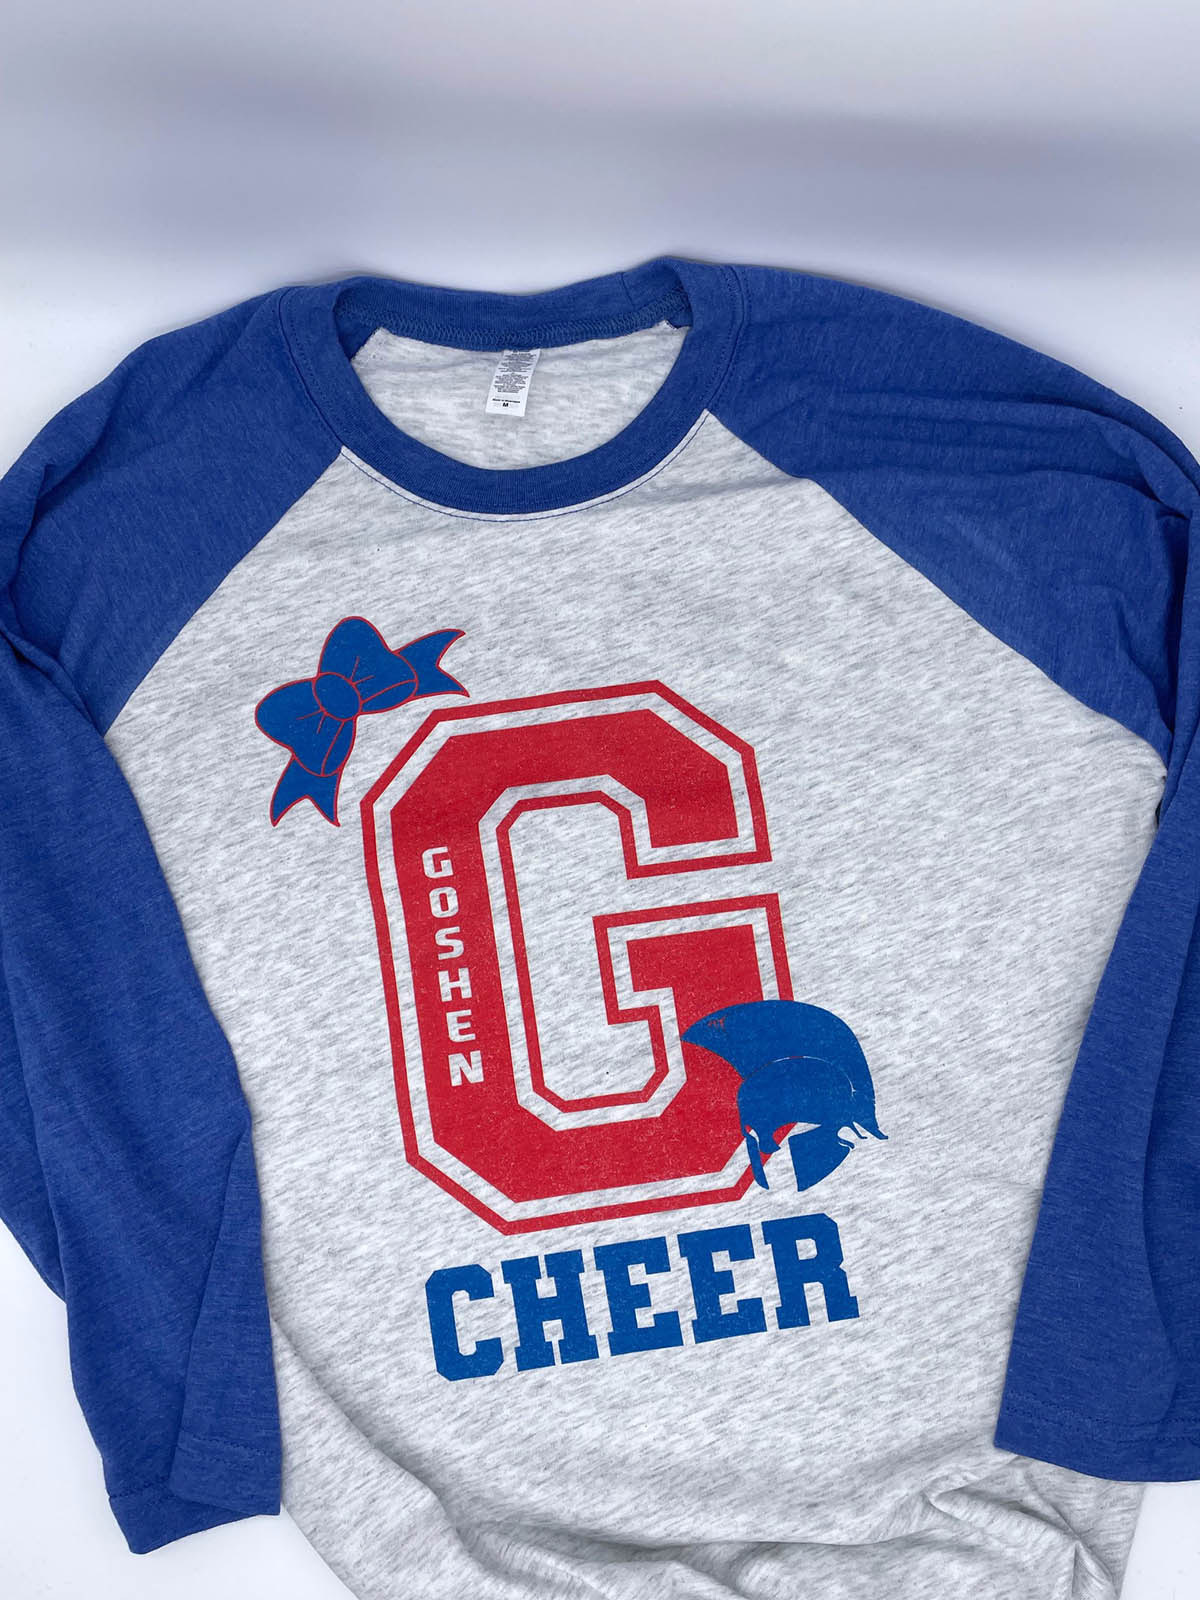 Goshen Cheer Design 12 raglan shirt